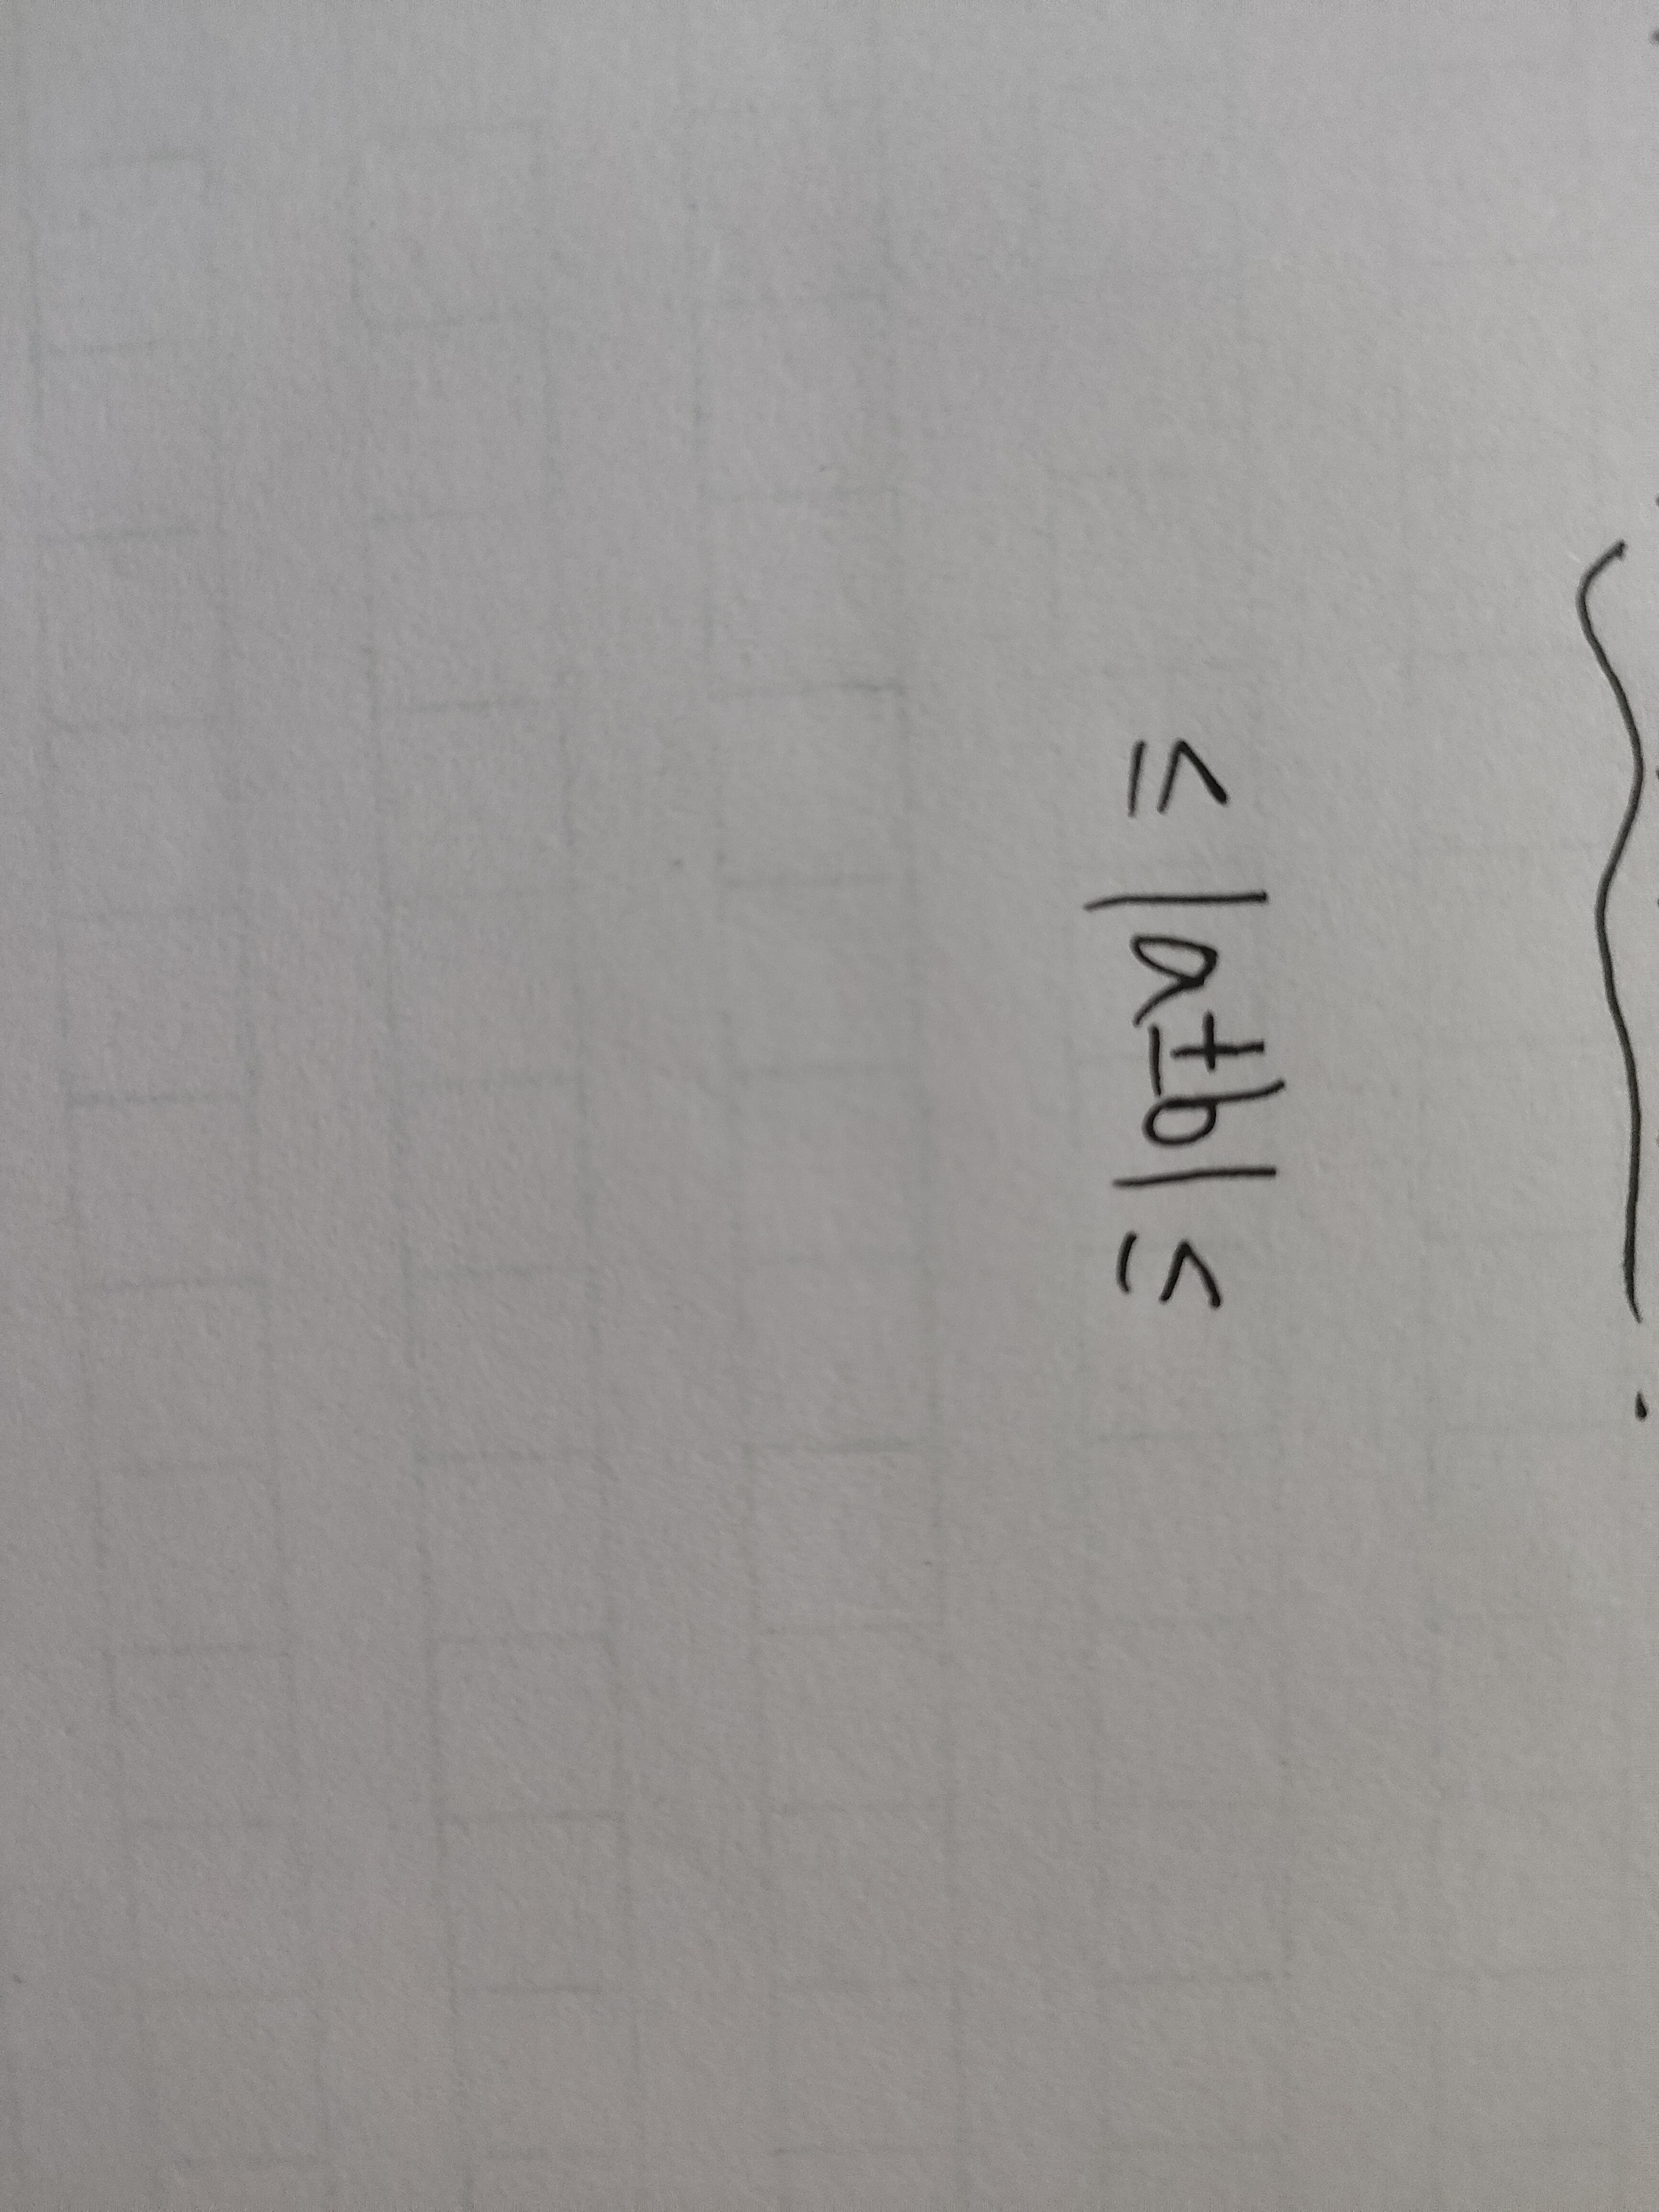 '></div><hr><h3>老师回复问题</h3>第一个，第一项就是被积函数是奇函数，积分区域对称，等于0，第二项就是标准正态分布的密度函数的积分，积分值是1，剩下的2e方就是积分值
第二个，左边